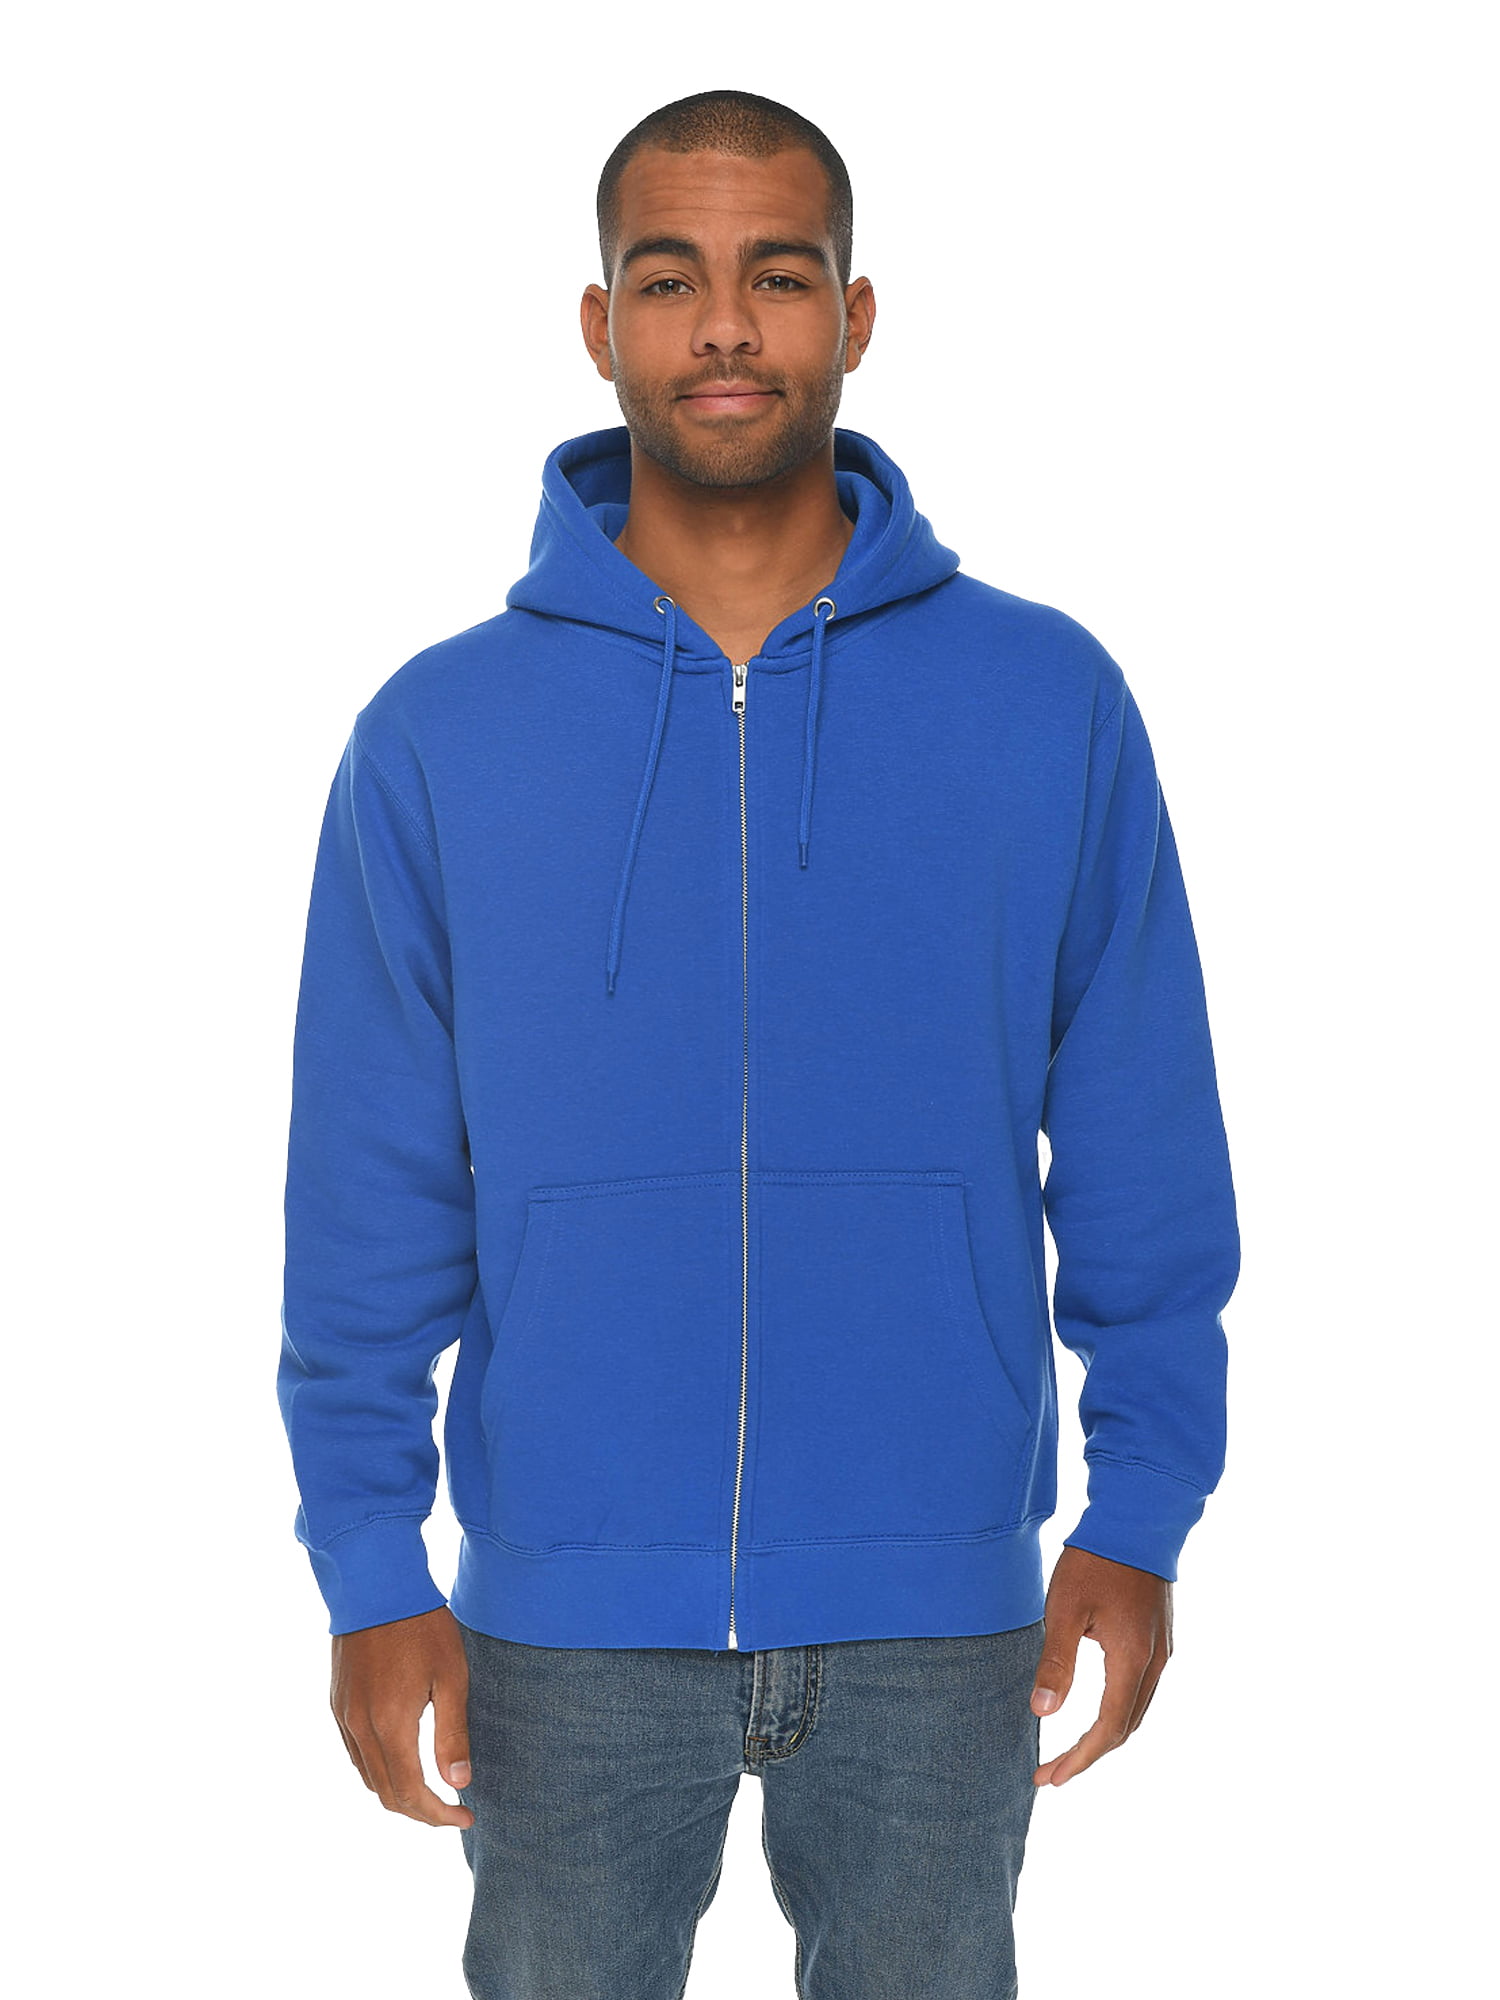 Unisex Zipper Hoodie for Women XS S M L XL 2XL Men Hoodie Casual Plain  Hoody for Men - Blue Hoodie Blue Sweatshirt